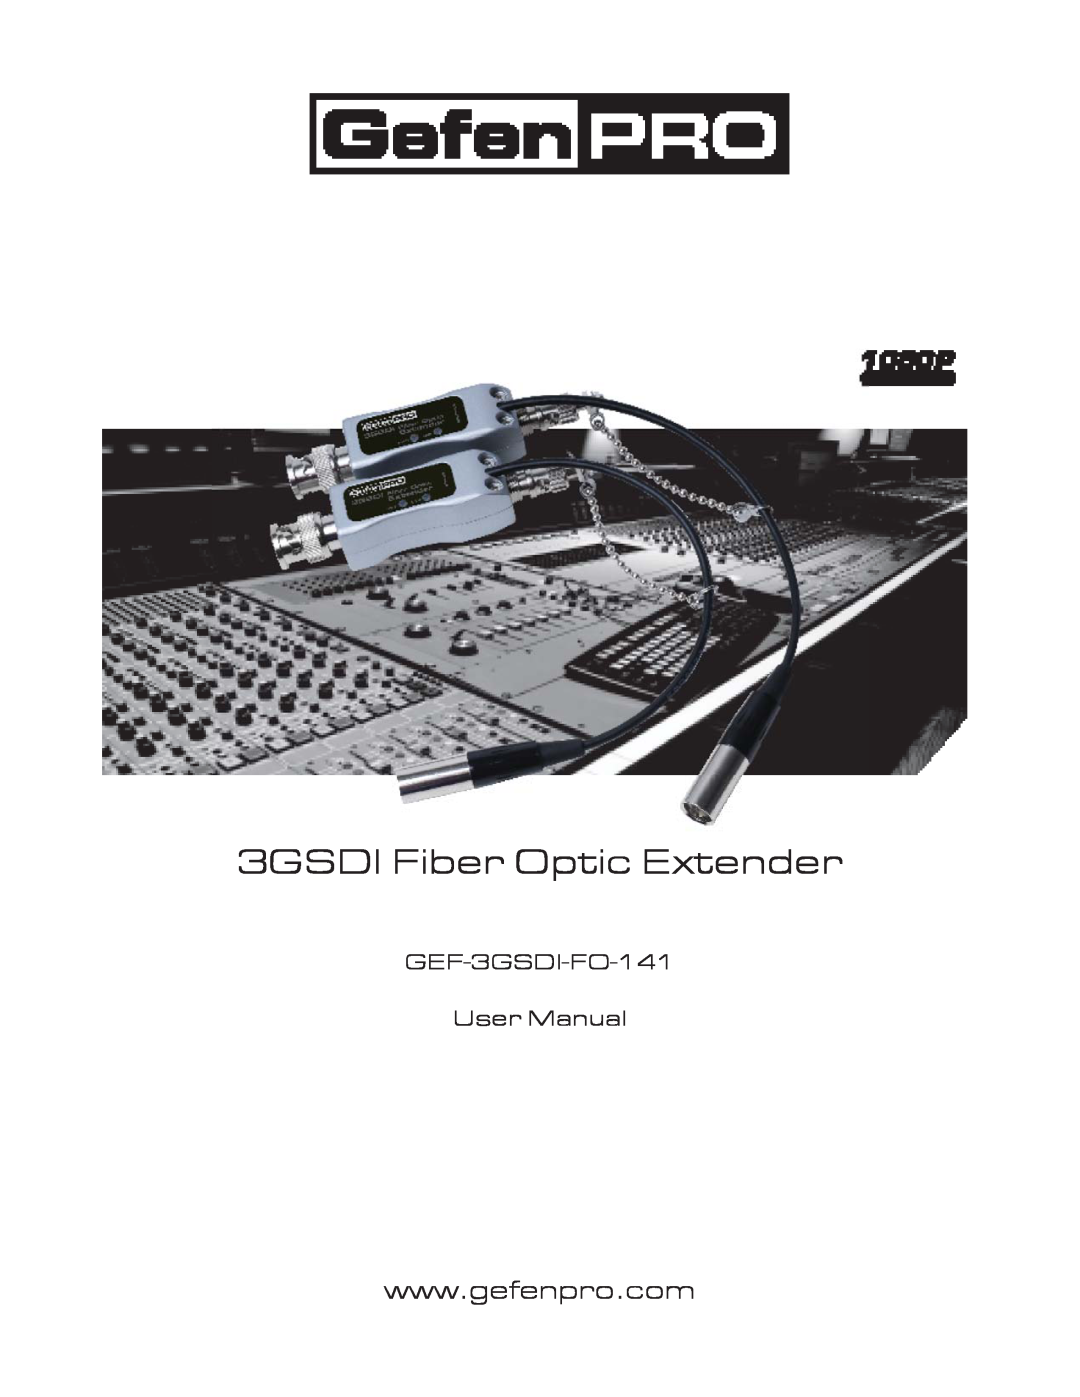 Gefen user manual 3GSDI Fiber Optic Extender, GEF-3GSDI-FO-141 User Manual 